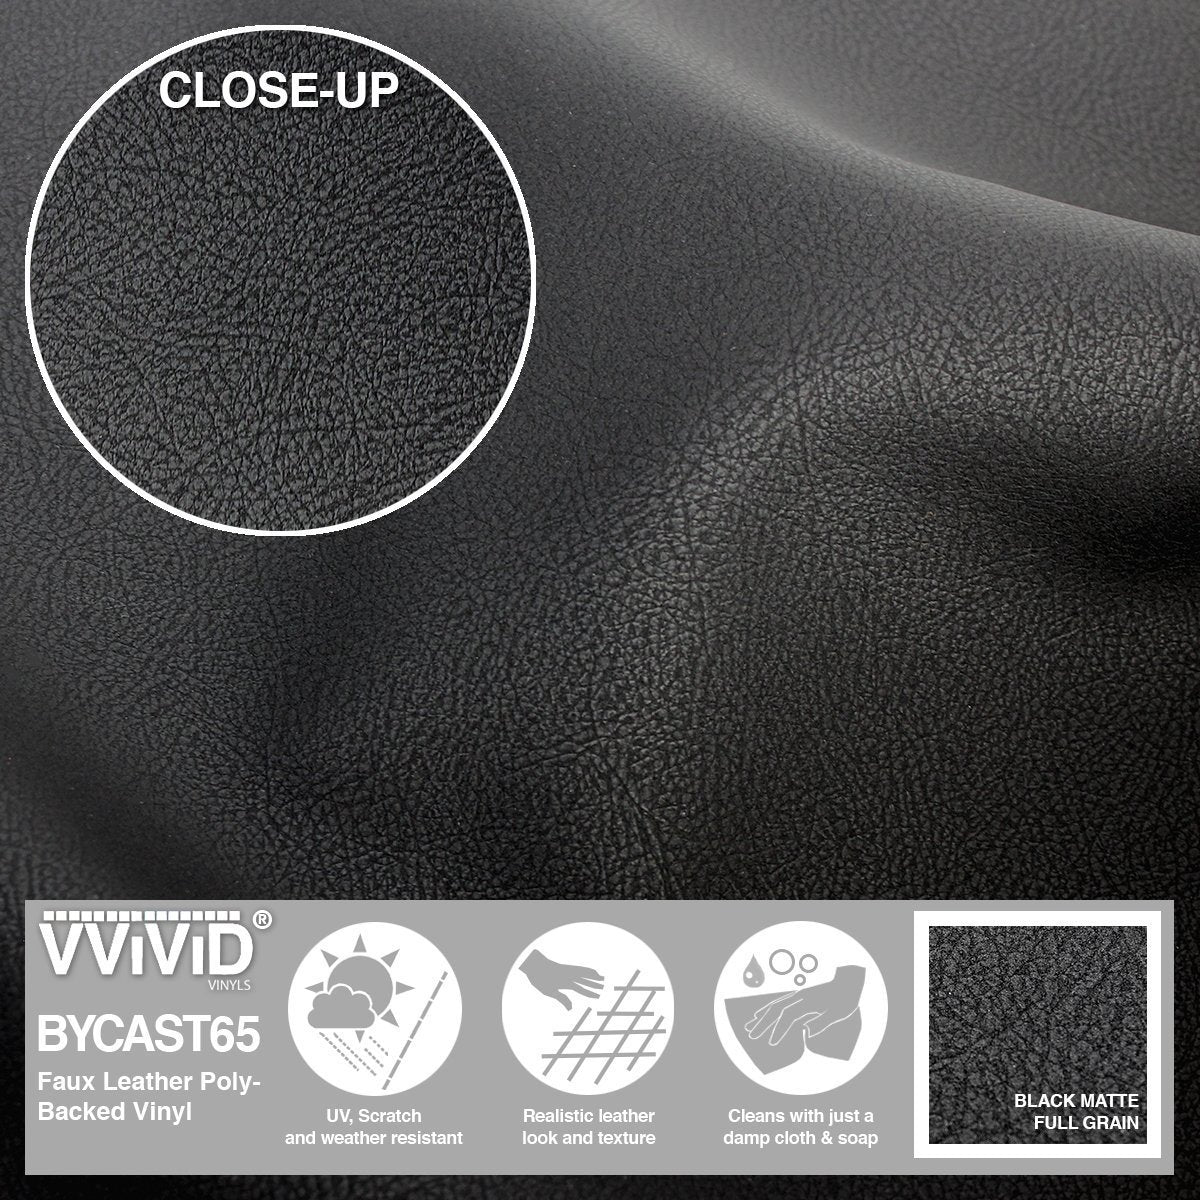 Bycast65 Black Matte Buffed Full-Grain Pattern Faux Leather Marine Vinyl Fabric display